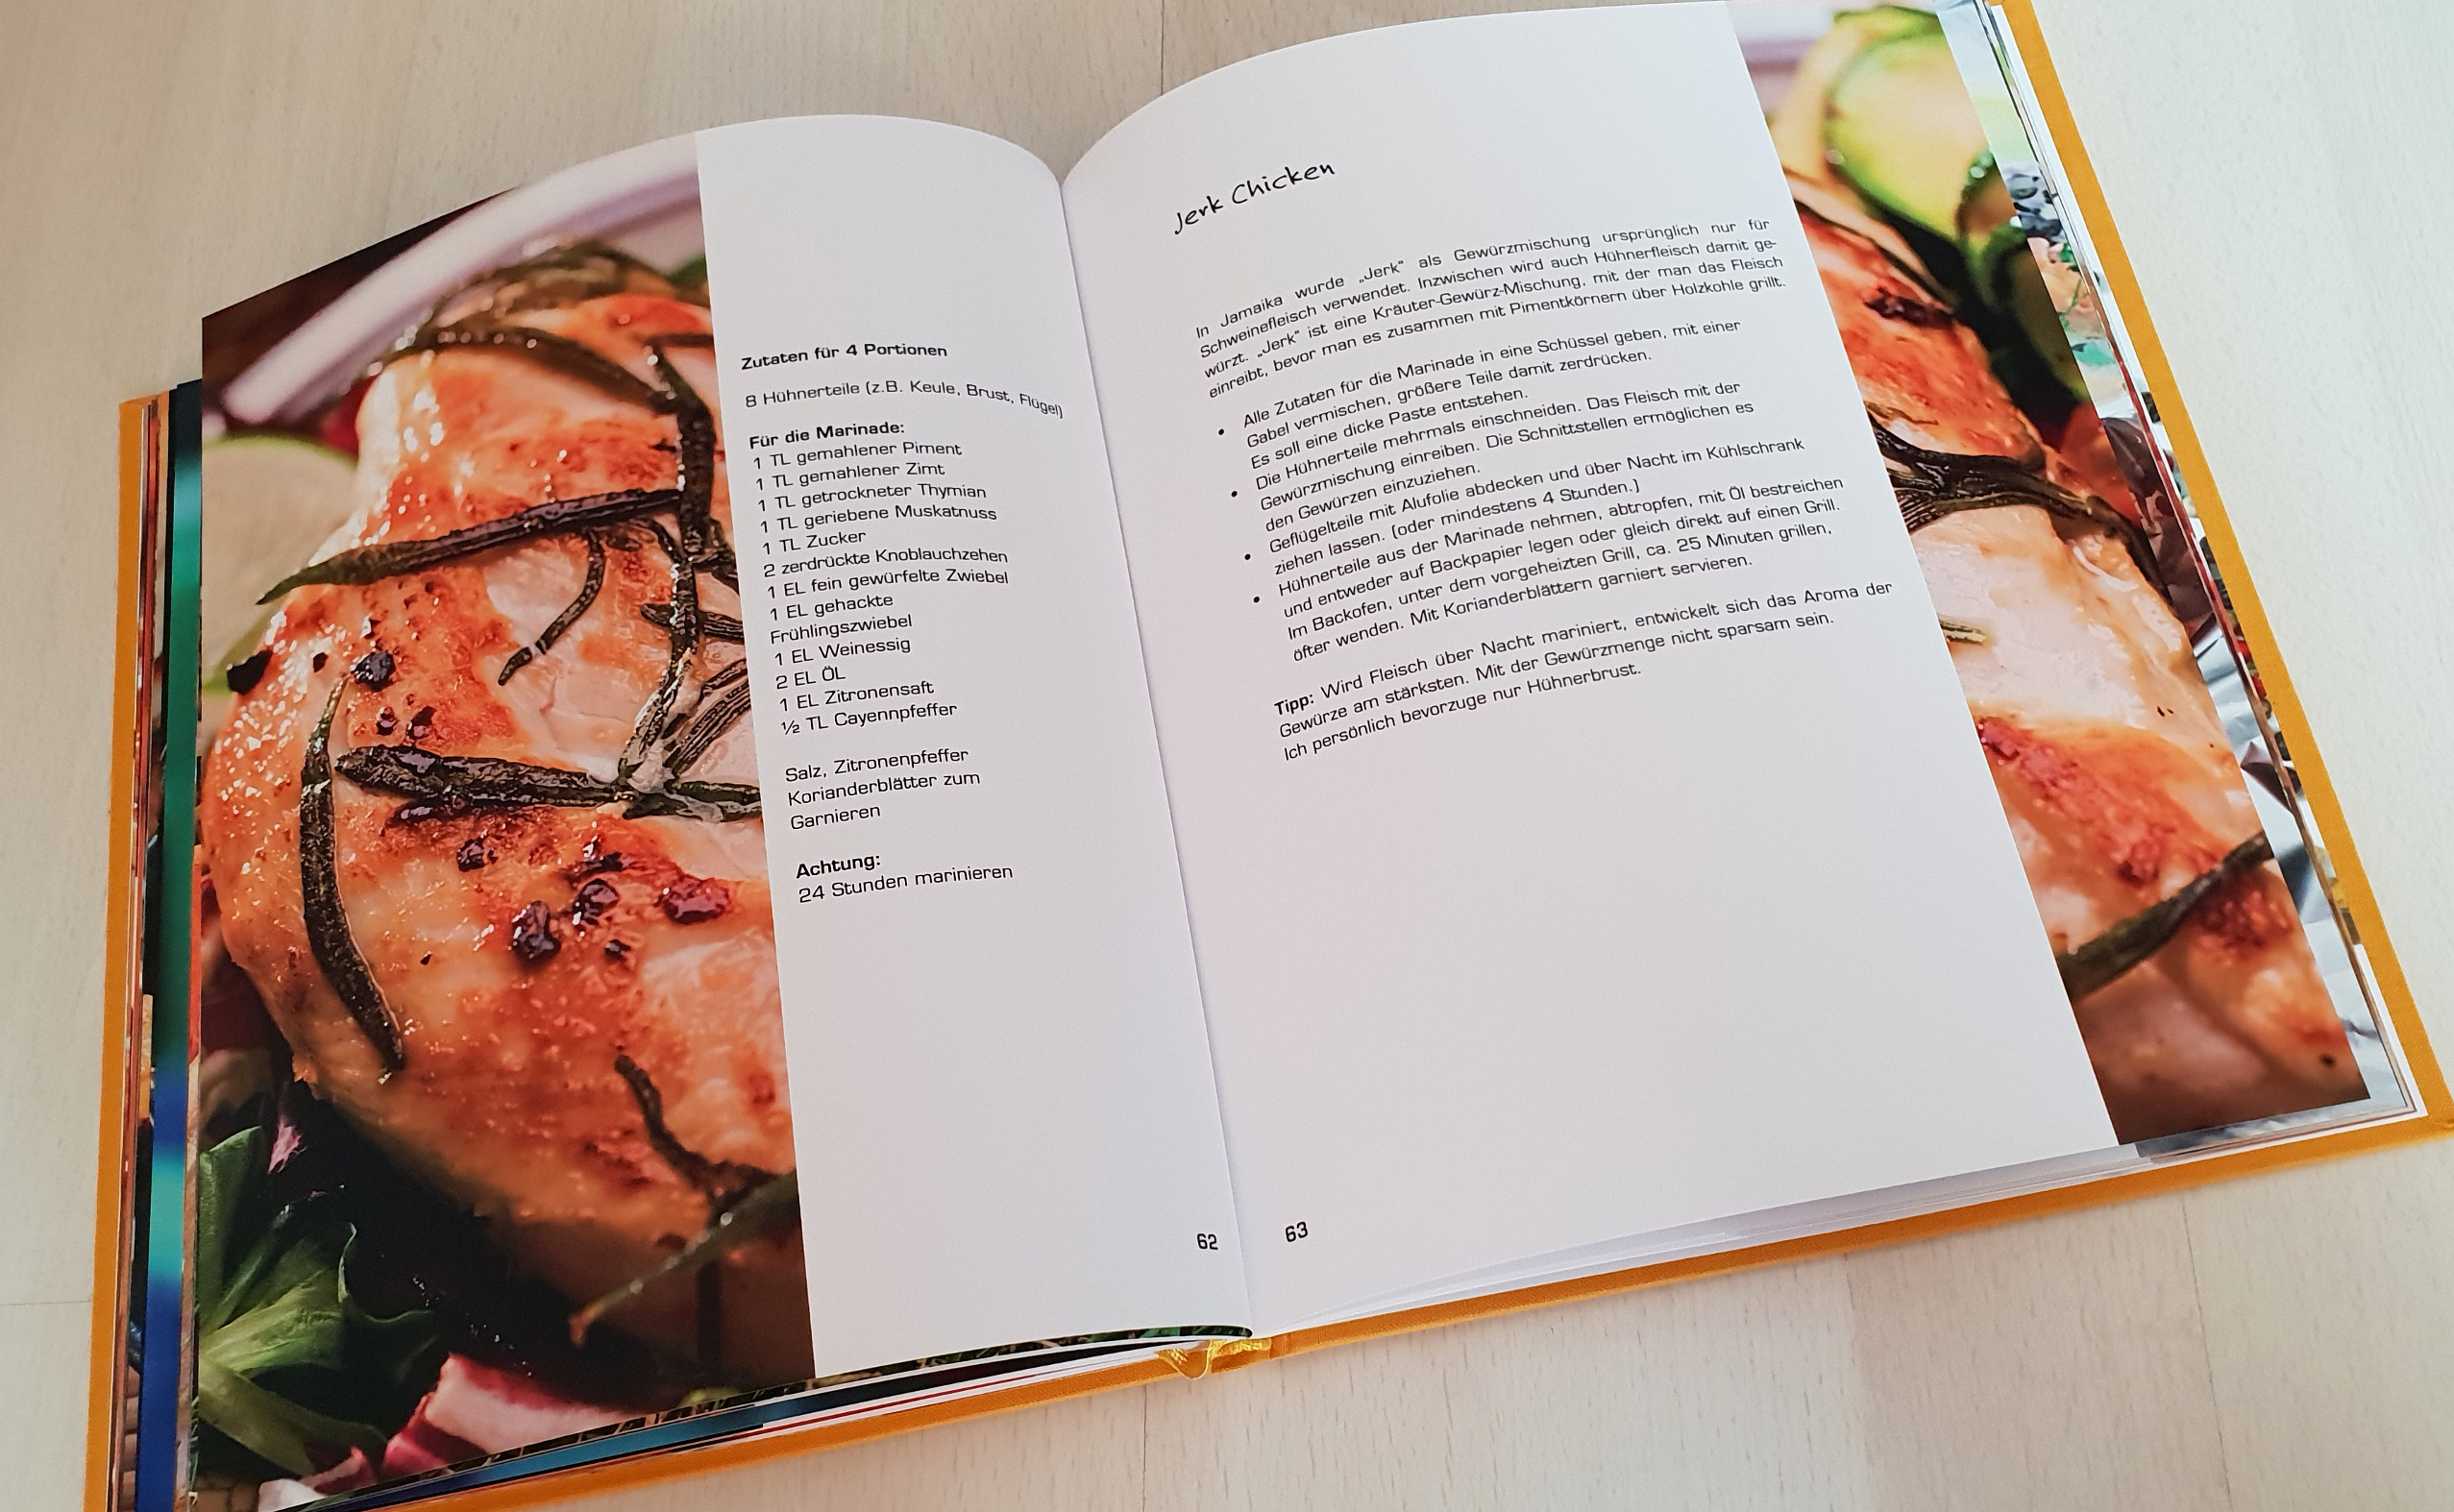 Cooking forfriendsonly - Das Kochbuch